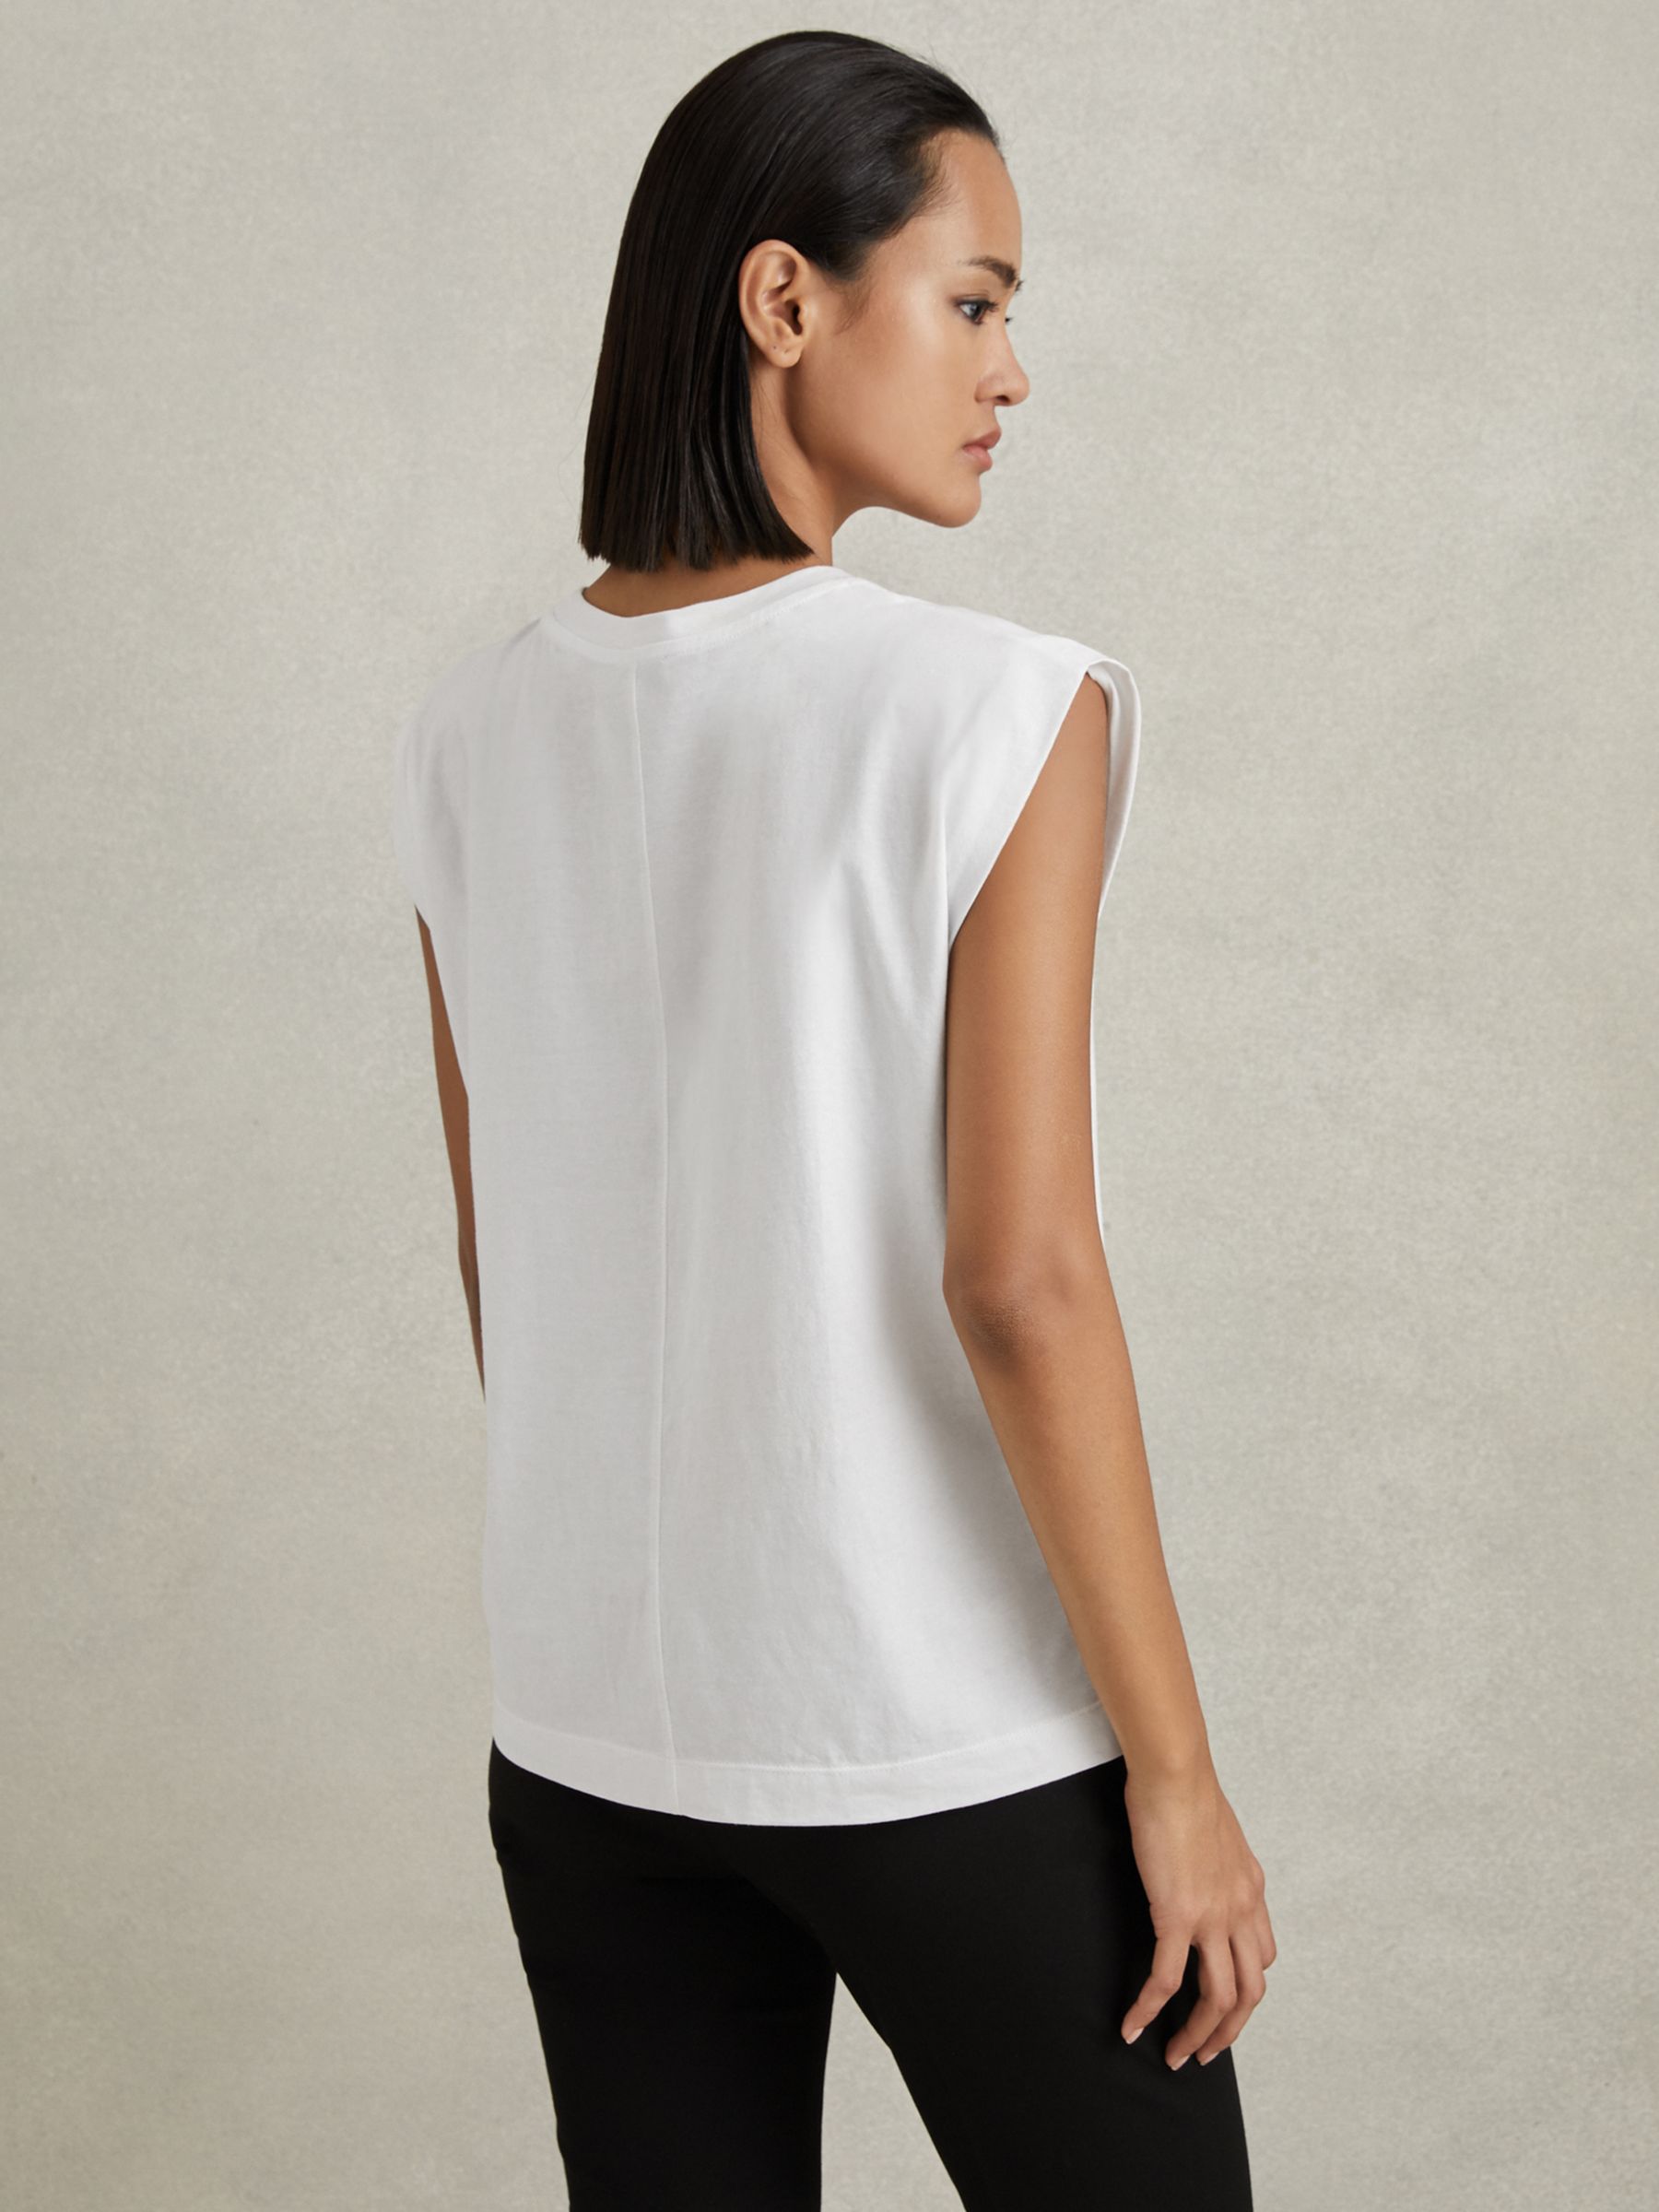 Reiss Morgan Cap Sleeve Cotton T-Shirt, White, XS